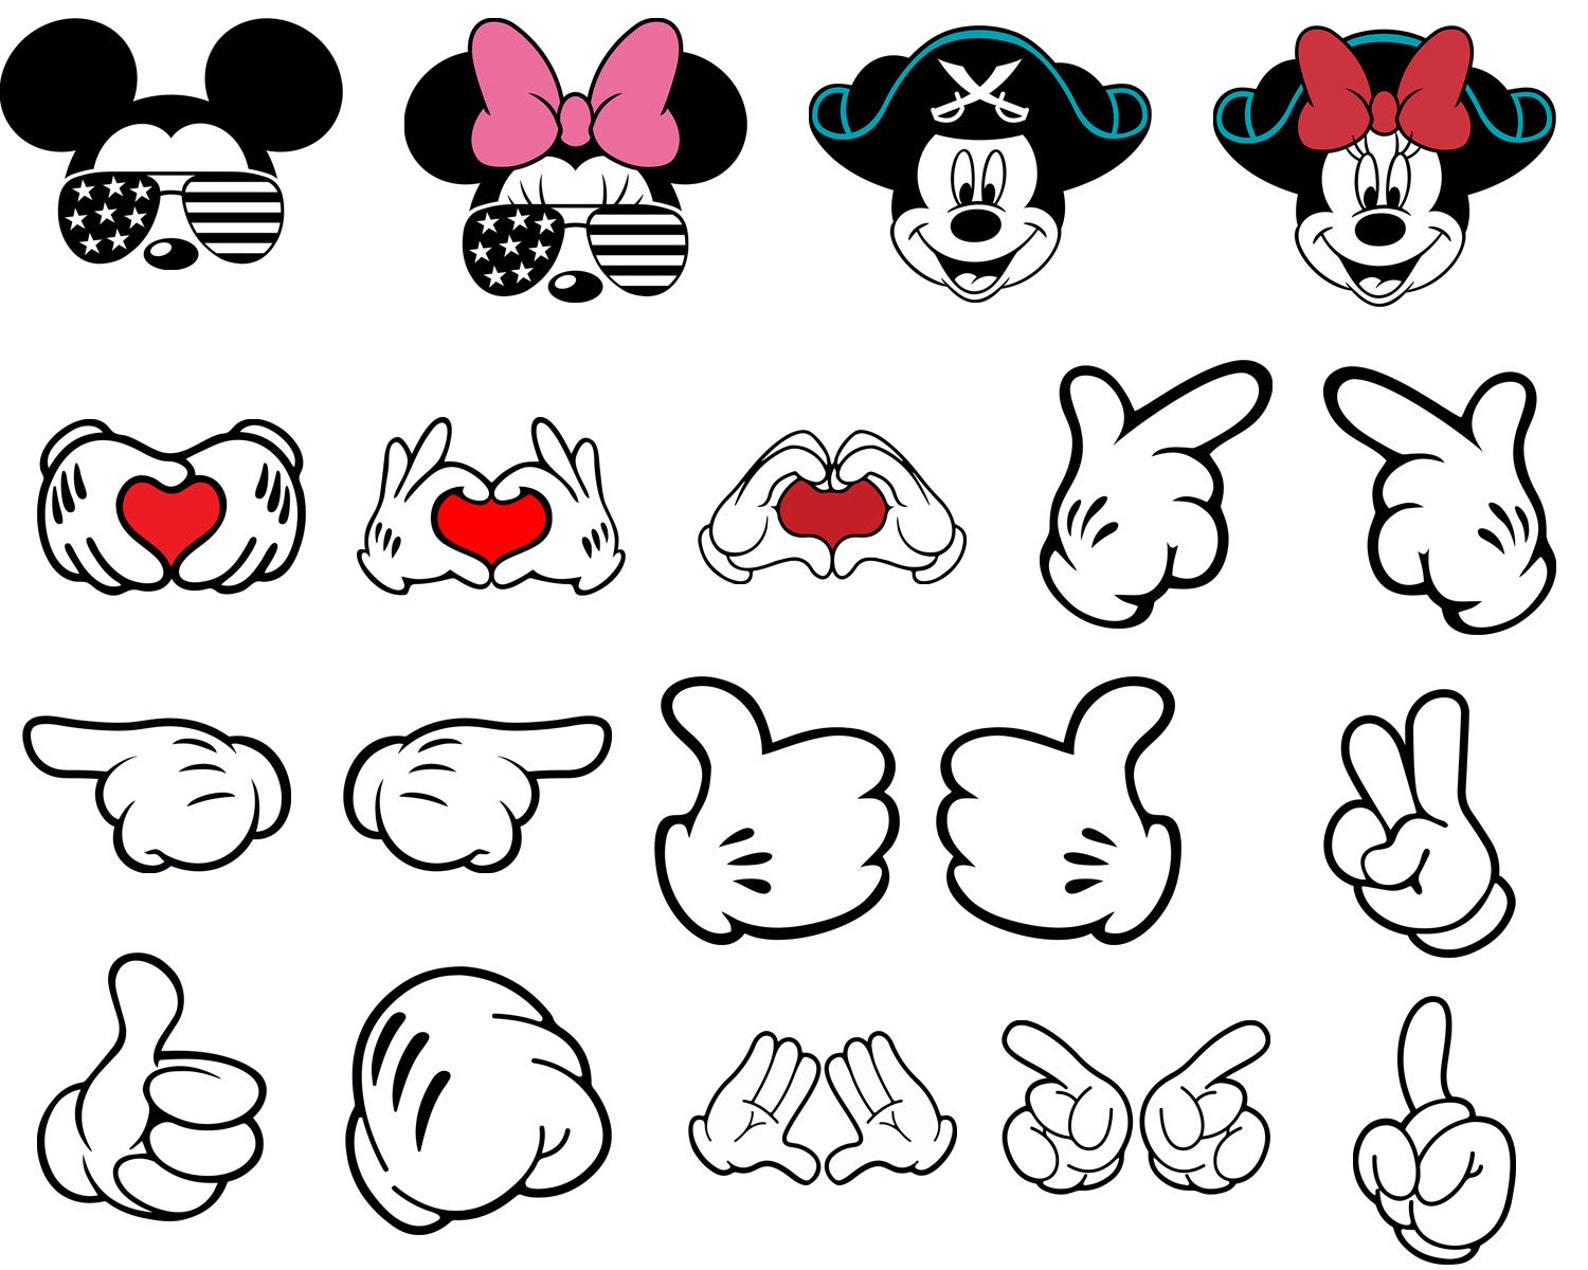 Mickey emotions.